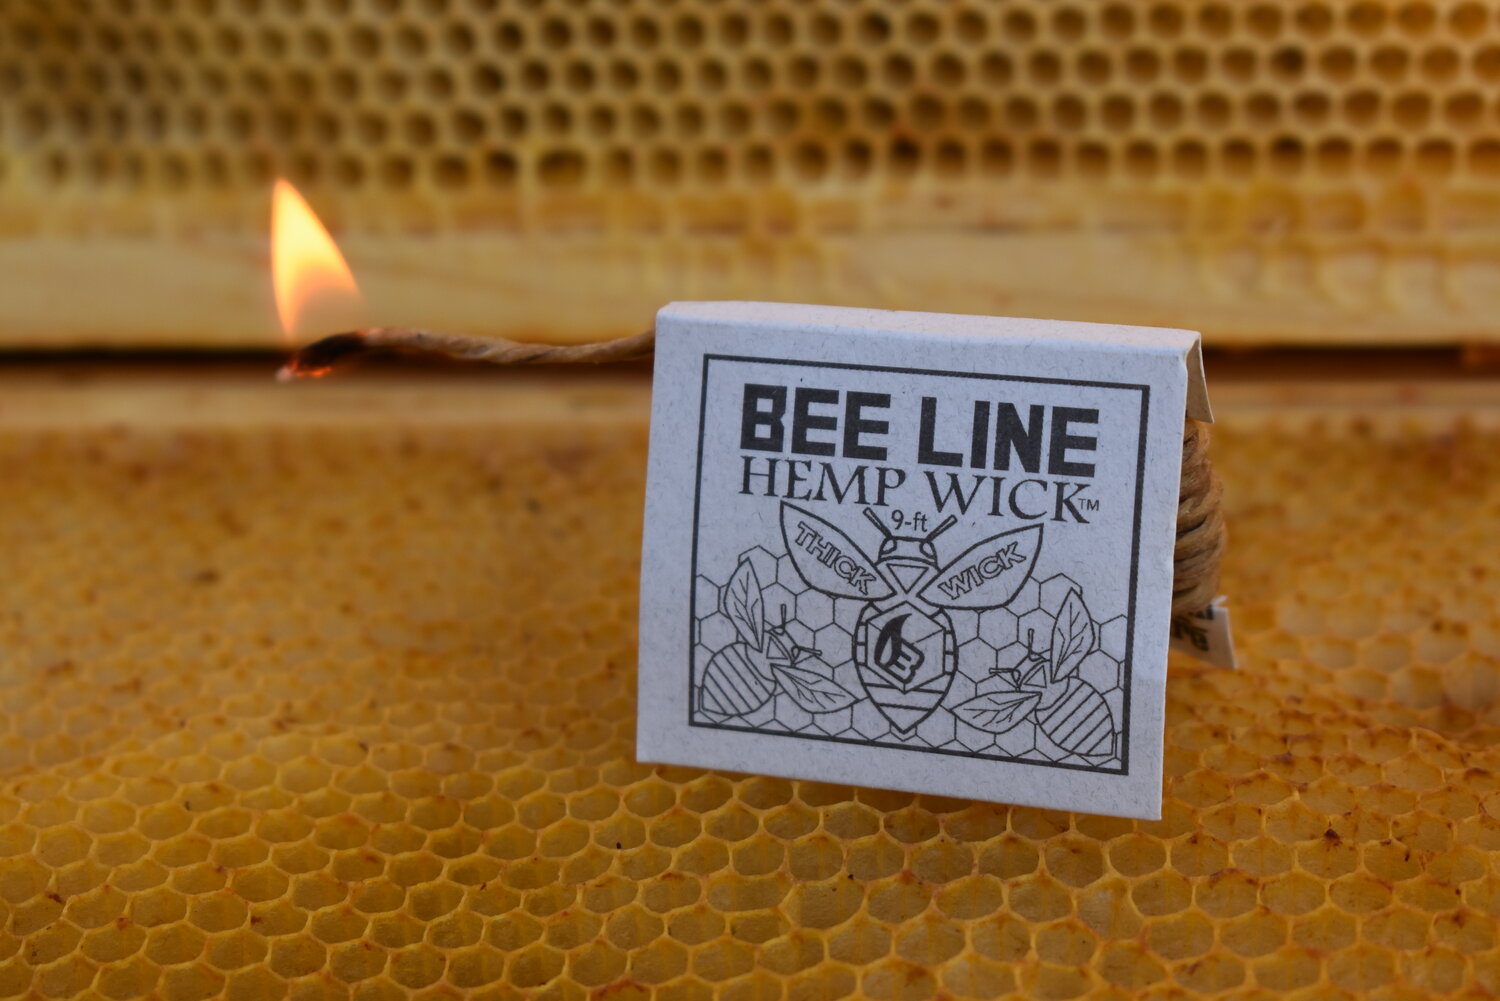 Bee Line – Thick Hemp Wick 200ft